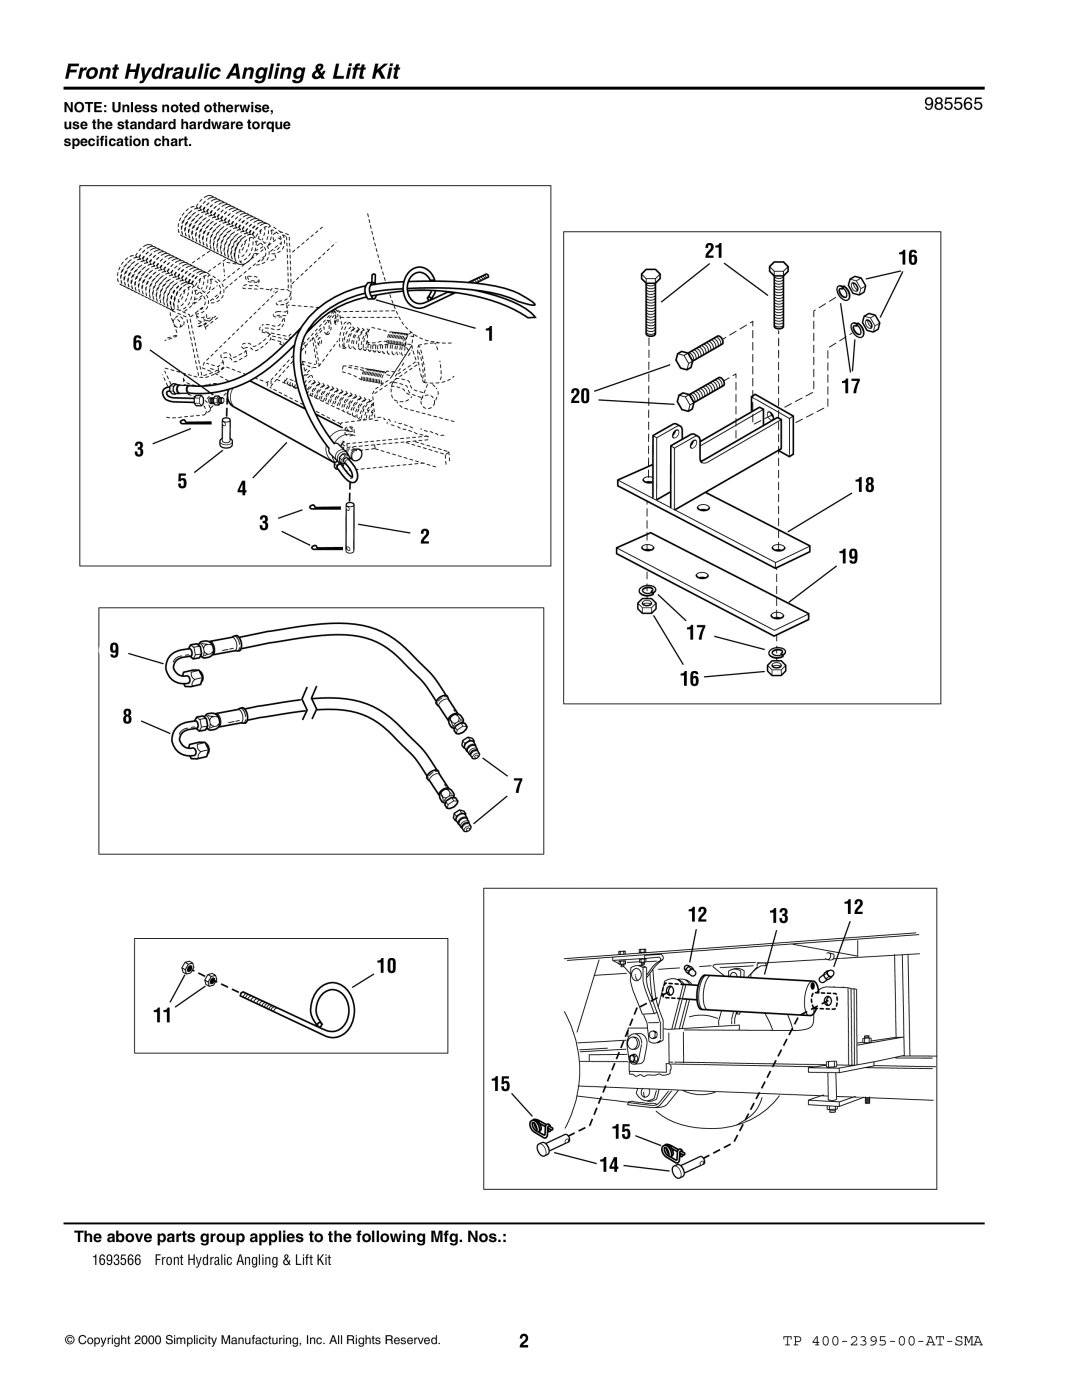 Snapper manual Front Hydraulic Angling & Lift Kit, 2616, 1158, TP 400-2395-00-AT-SMA 